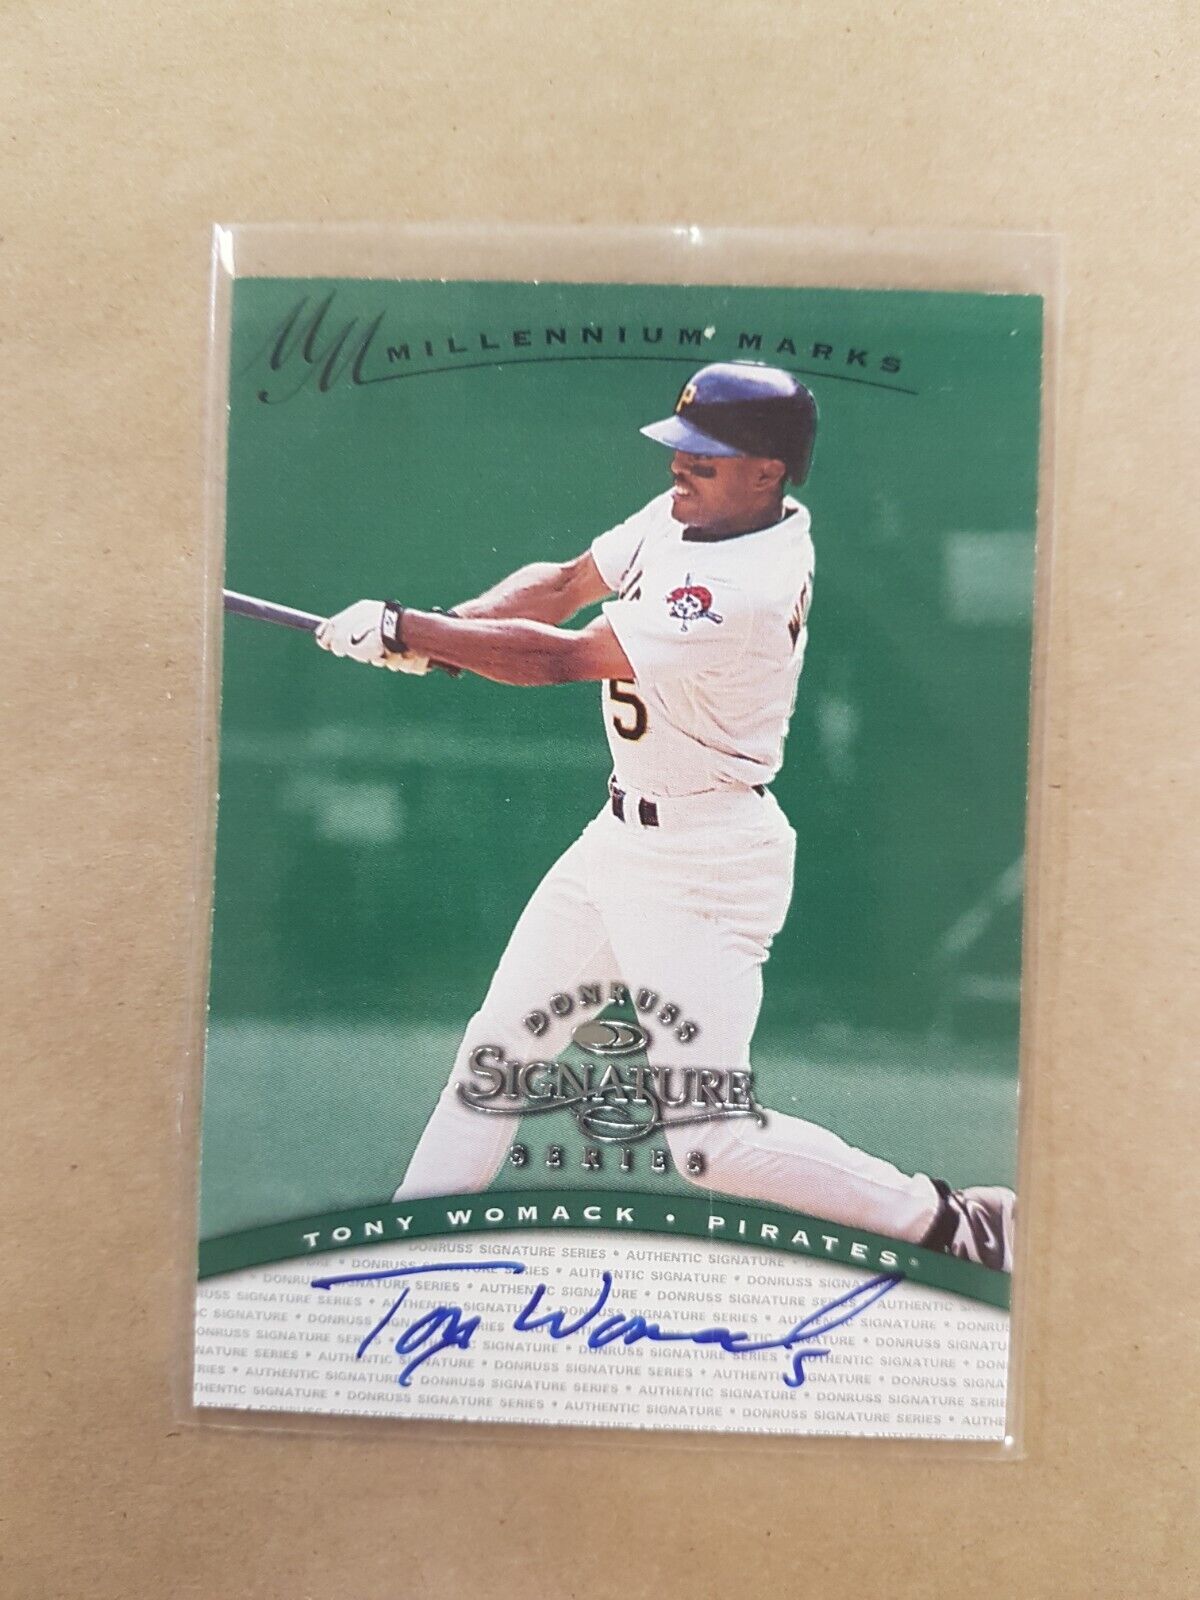 Tony Womack Pirates Autograph Photo SPORTS signed Baseball card MLB Donruss 1997